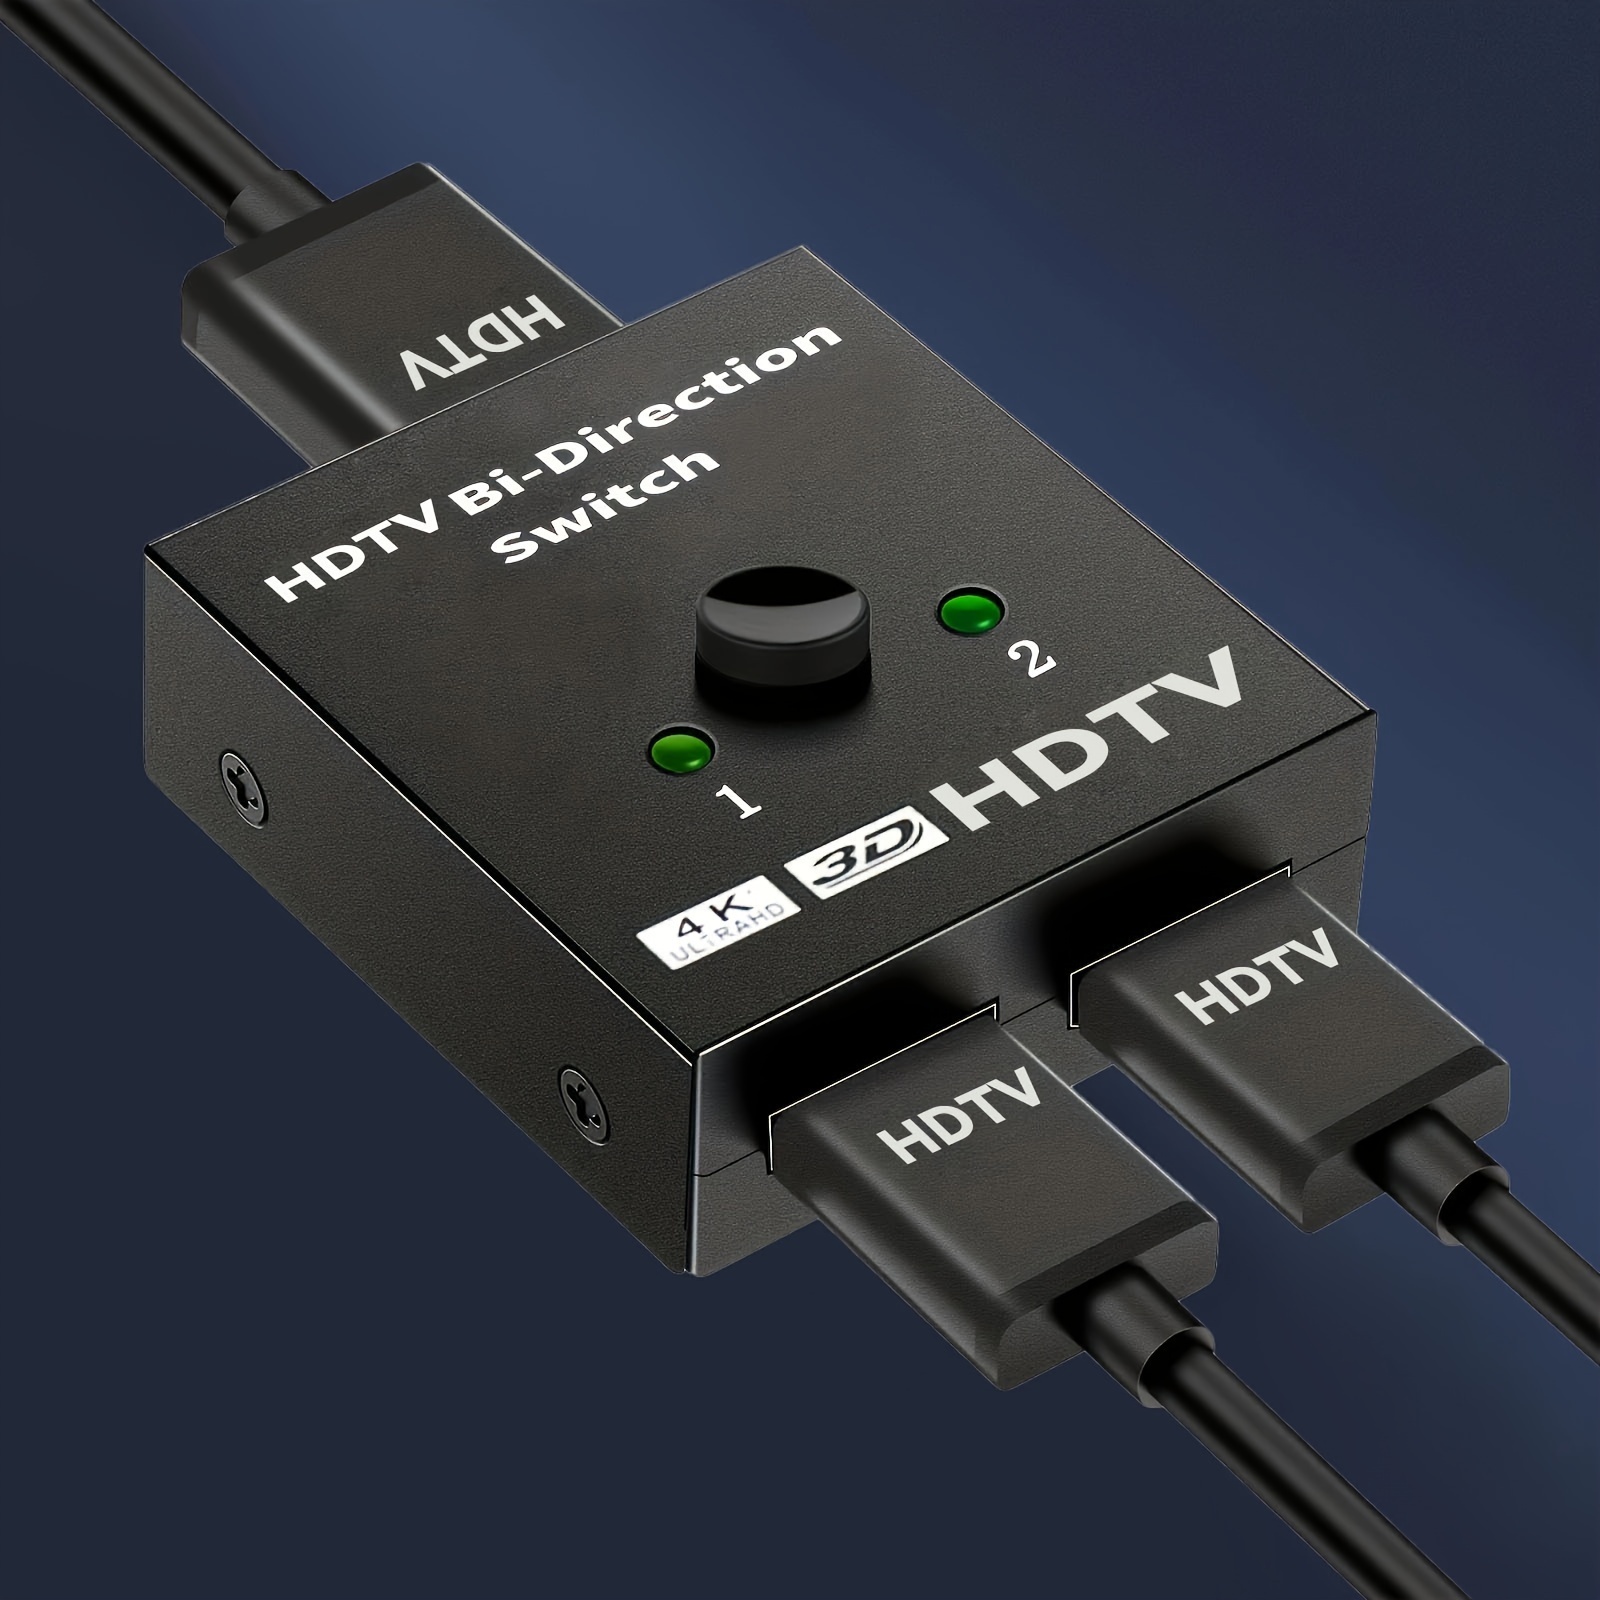 HDMI SWITCH, GANA Aluminio HDMI Switcher Bidireccional Entrada 2 a 1 Salida  o Switch 1 a 2 Salida, Soporta 4K,3D,1080P,HDMI Splitter para HDTV